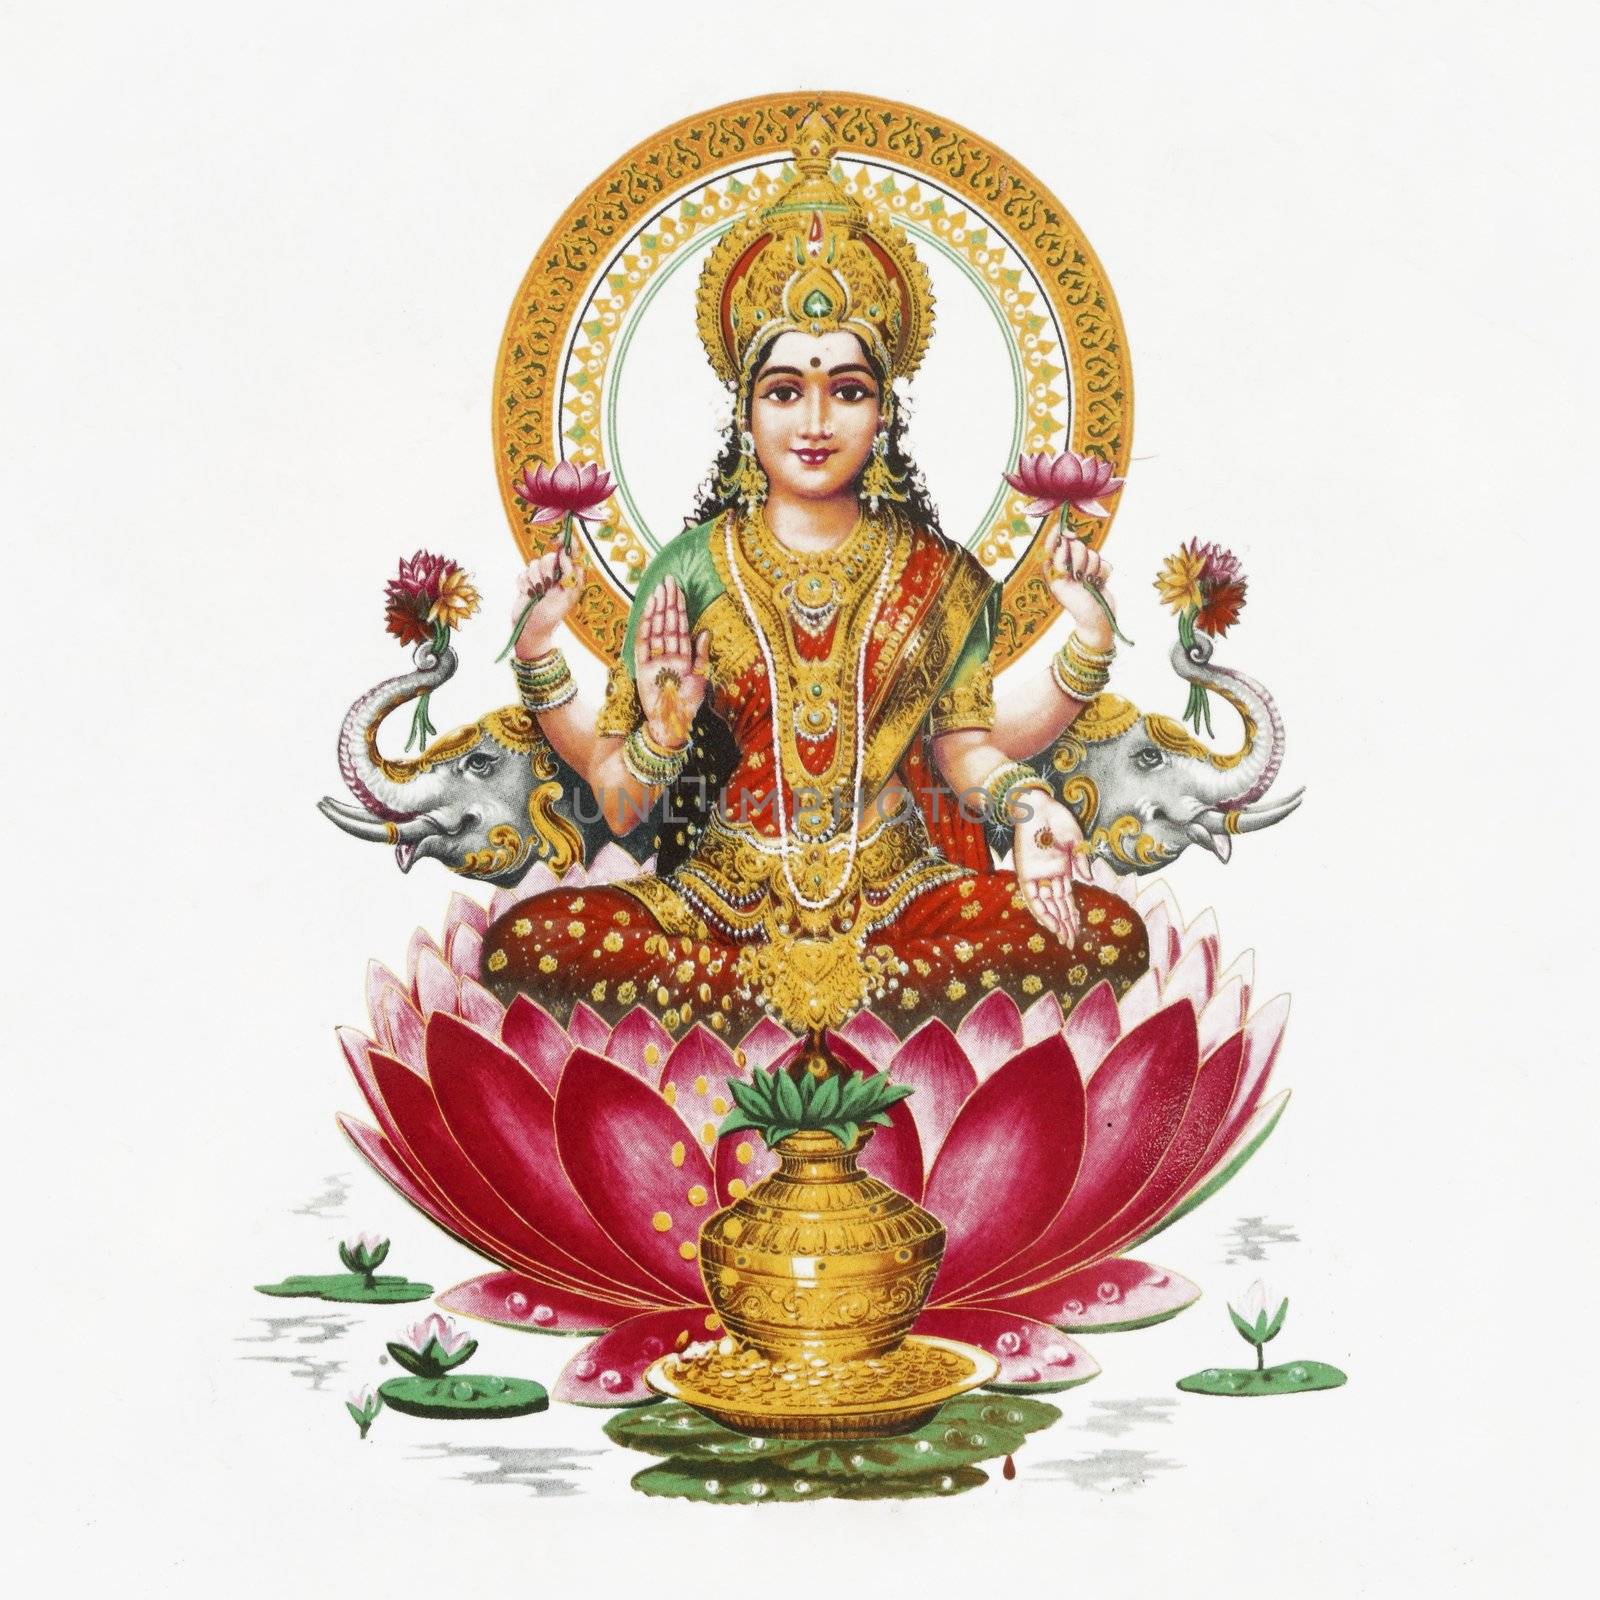 Lakshmi - Hindu goddess of wealth, prosperity,light,wisdom,fortune and fertility sitting on flower of red lotus, India, Asia